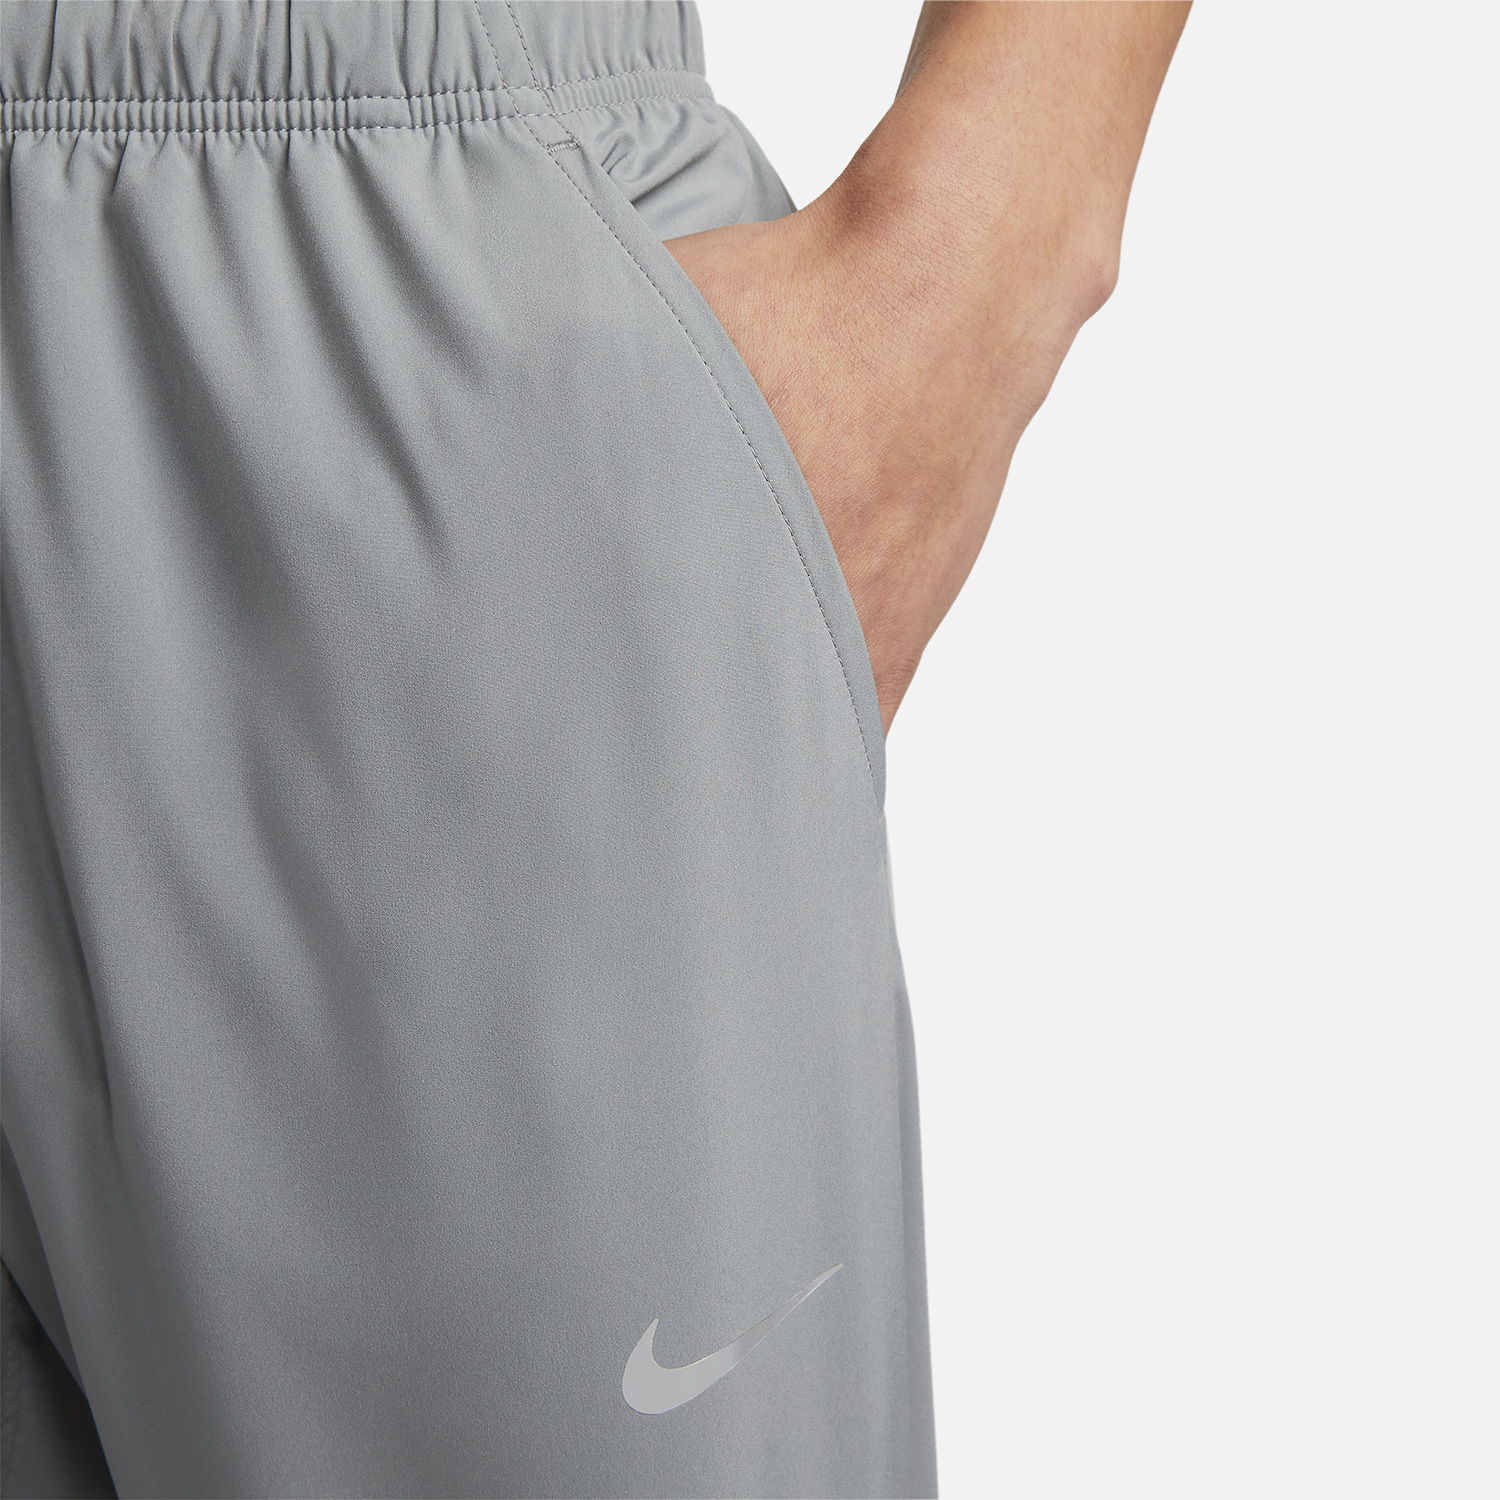 Nike Dri-Fit Form Pants - Black